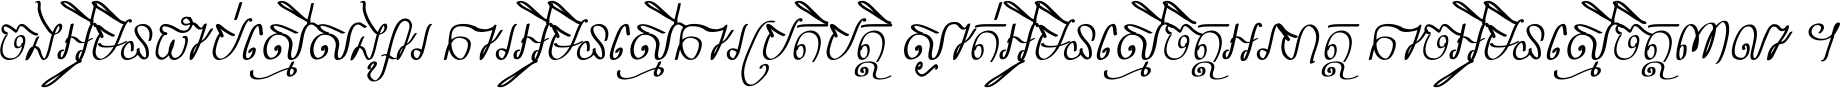 ASvadek Khmer Calligraphy Italic